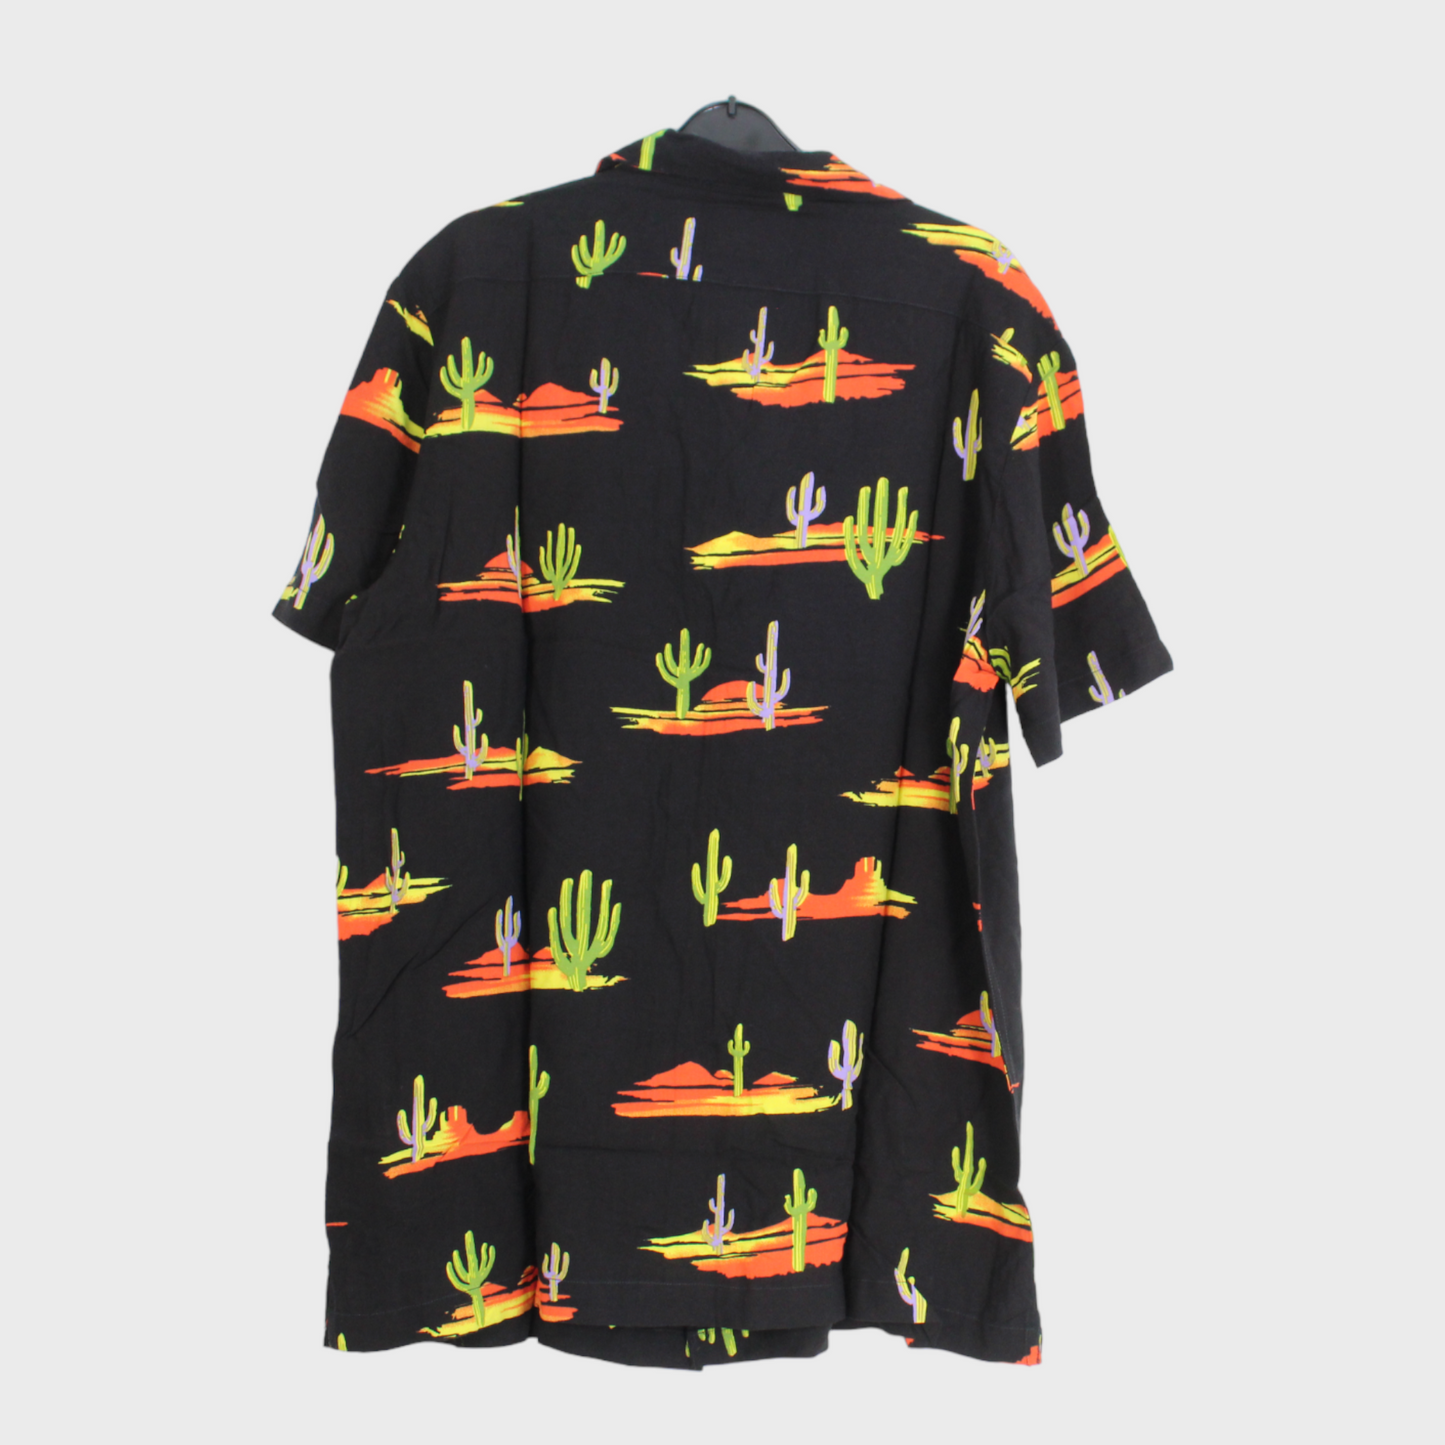 Mens Wrangler Cactus Shirt - Size Large